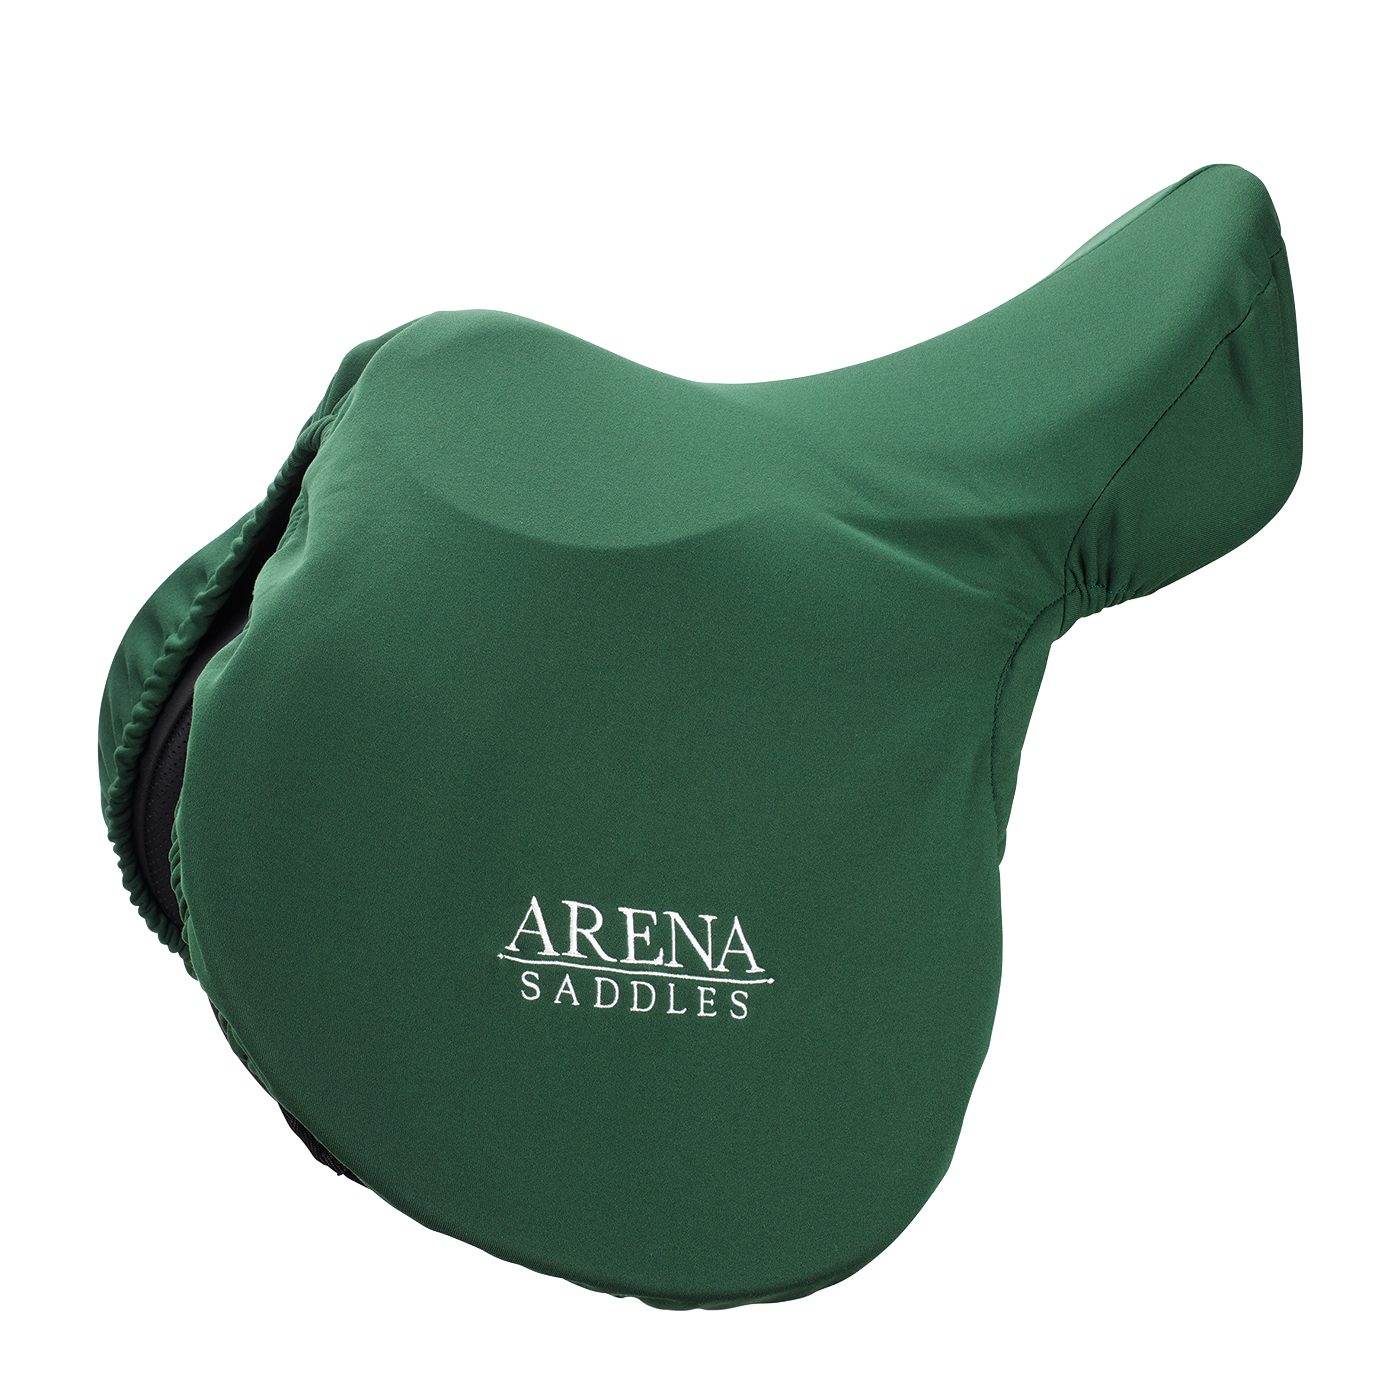 Arena Saddle Cover - 735:41279613141175